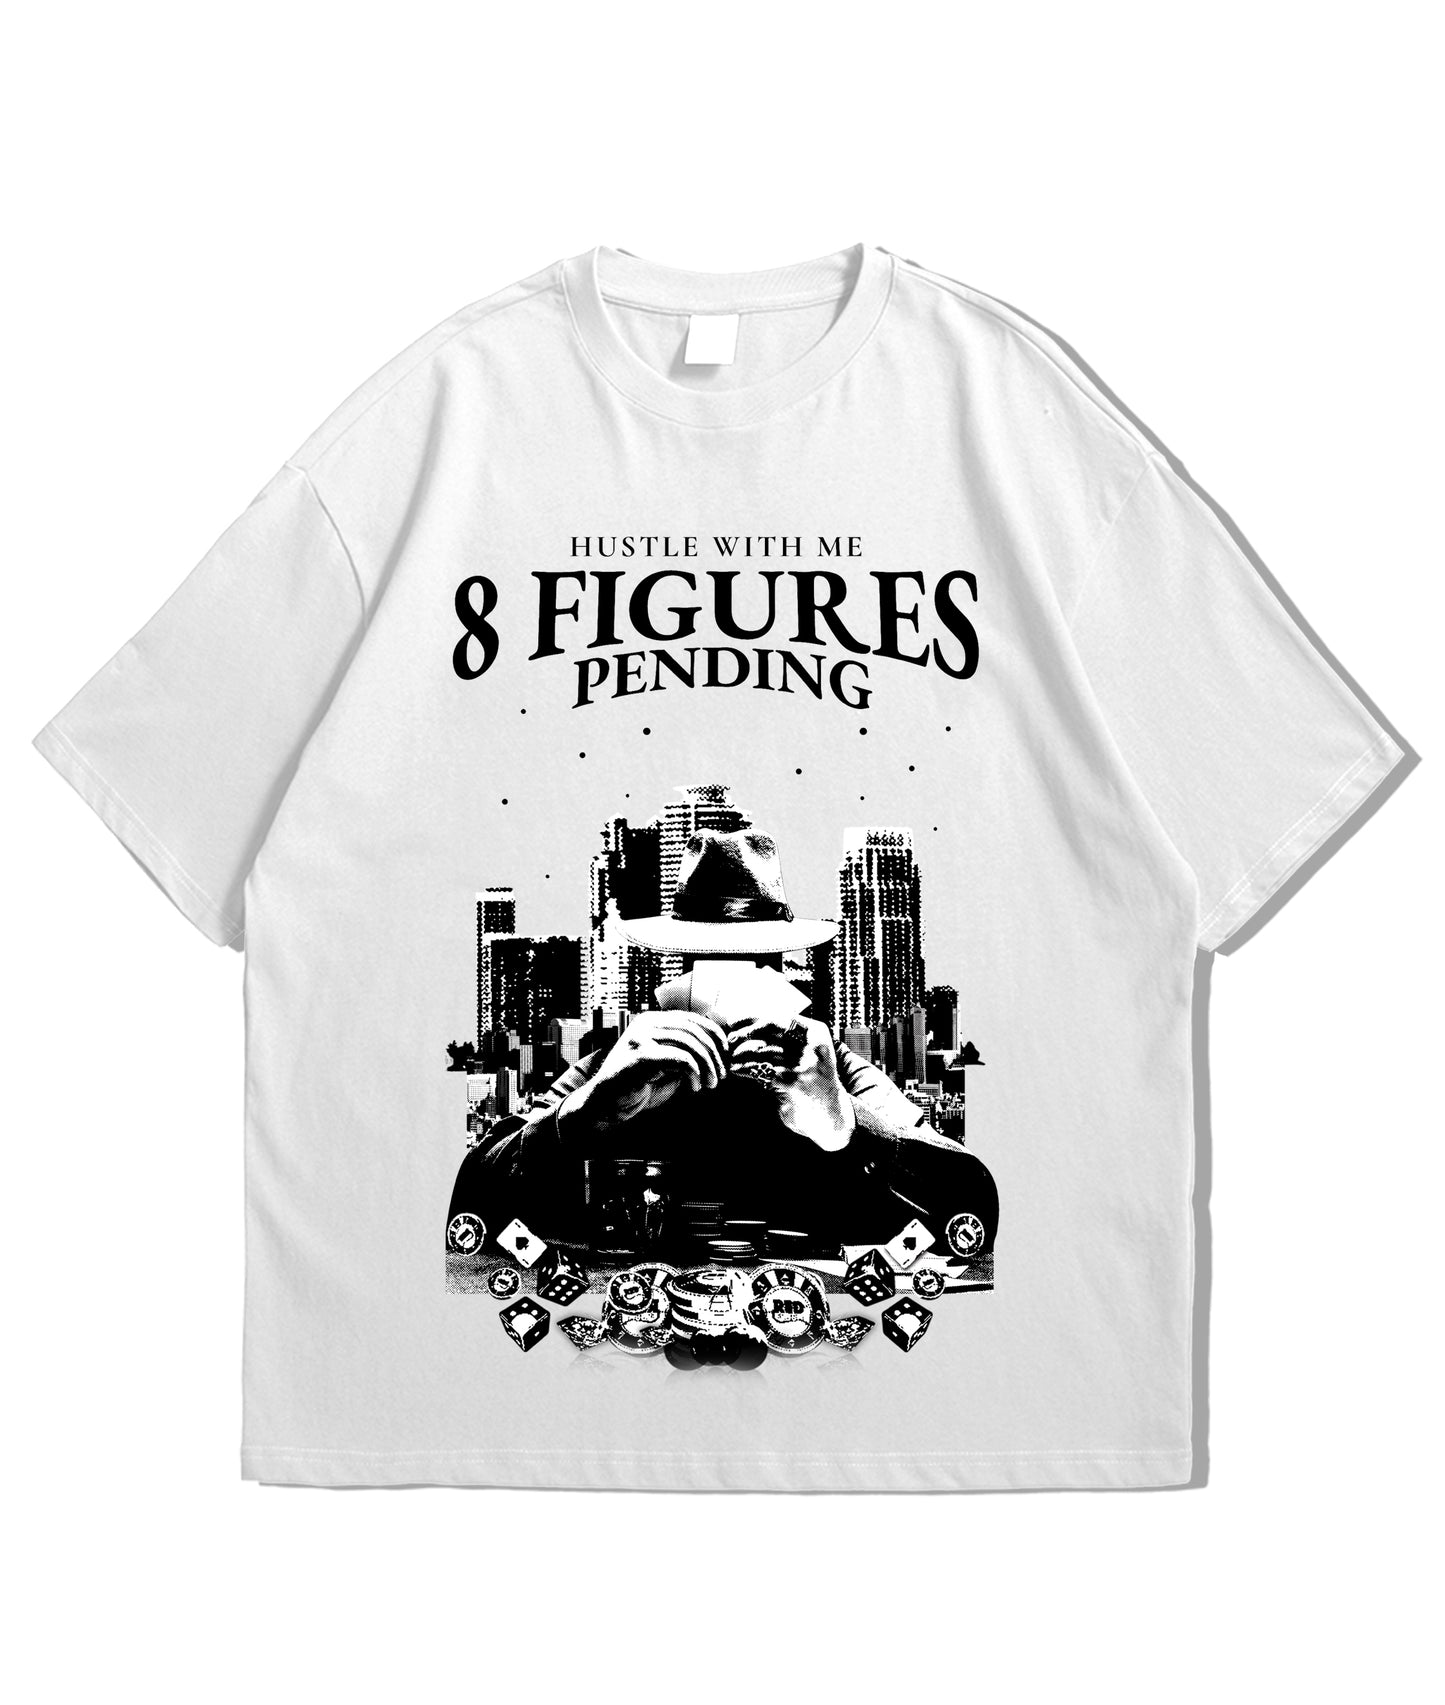 8 Figures Pending T-Shirt